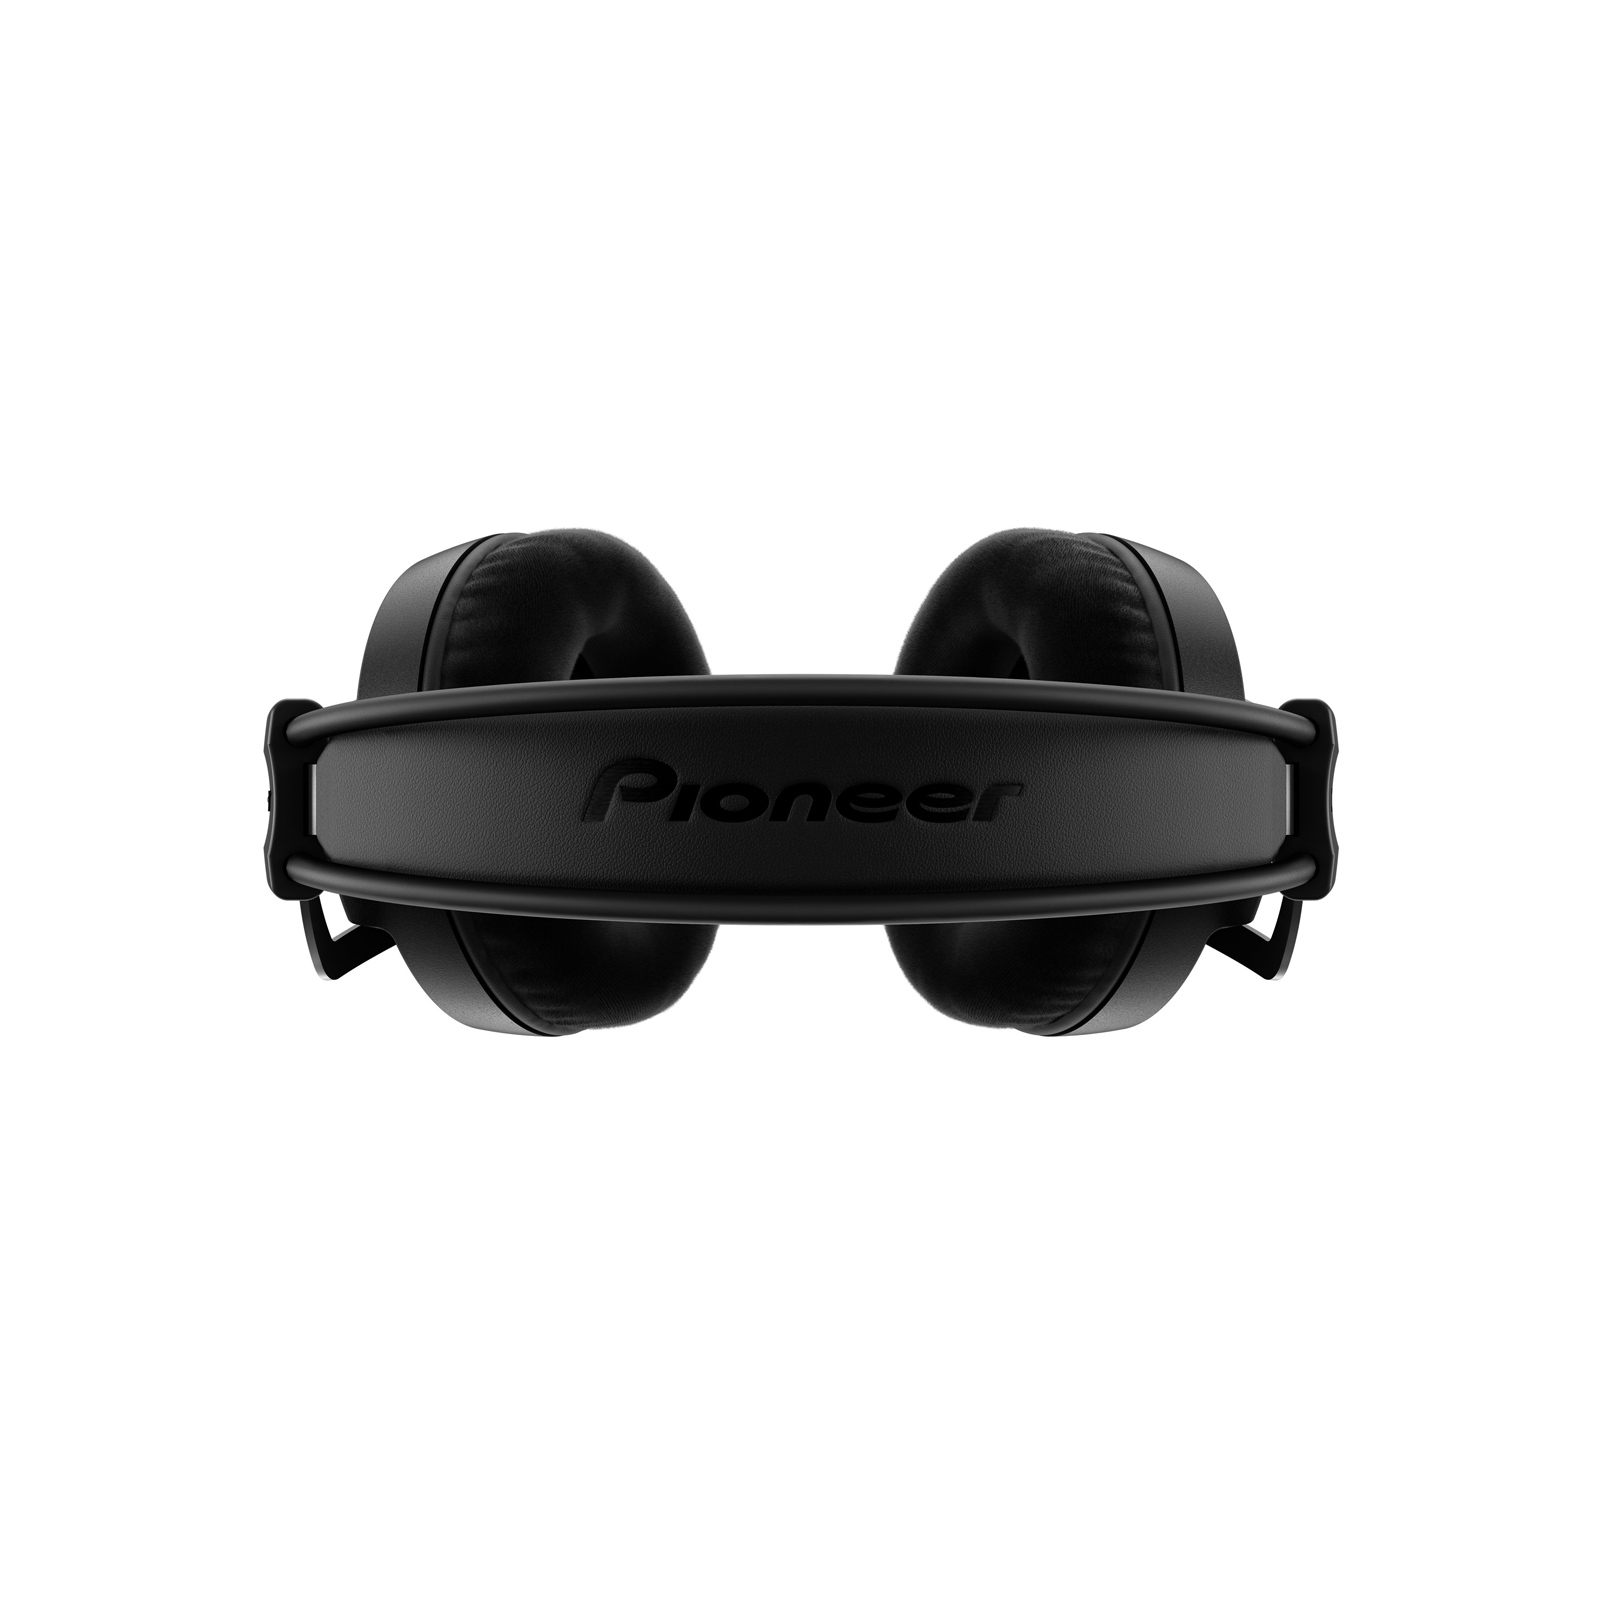 Pioneer dj HRM-7 Closed headset